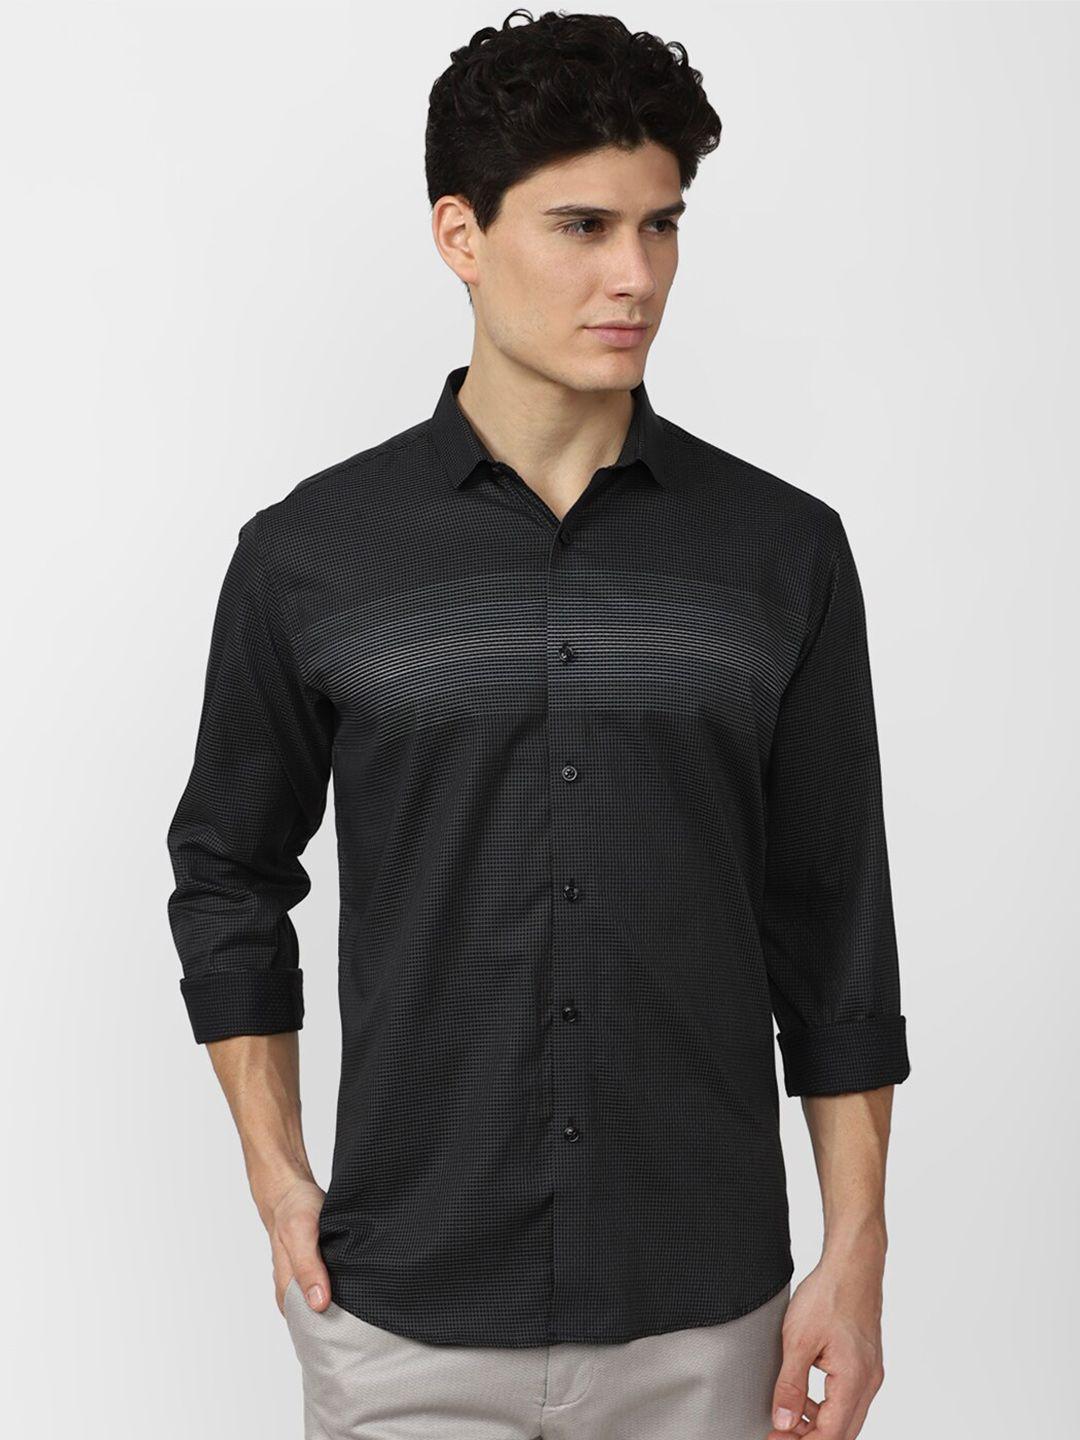 v dot men grey slim fit horizontal striped pure cotton casual shirt